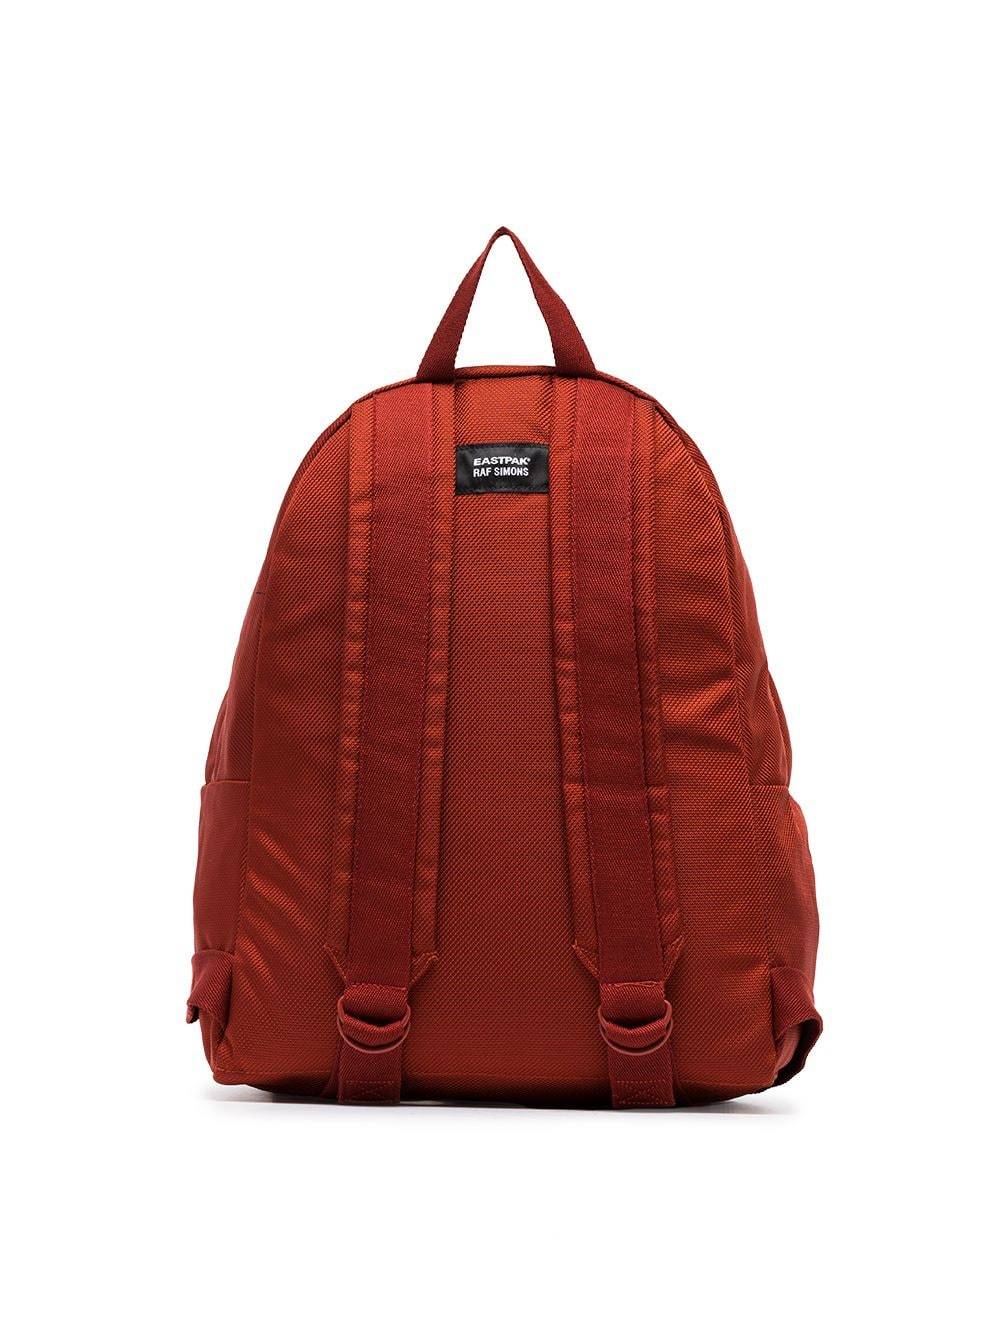 Eastpak X Raf Simons Burnt Orange Classic Backpack, $157